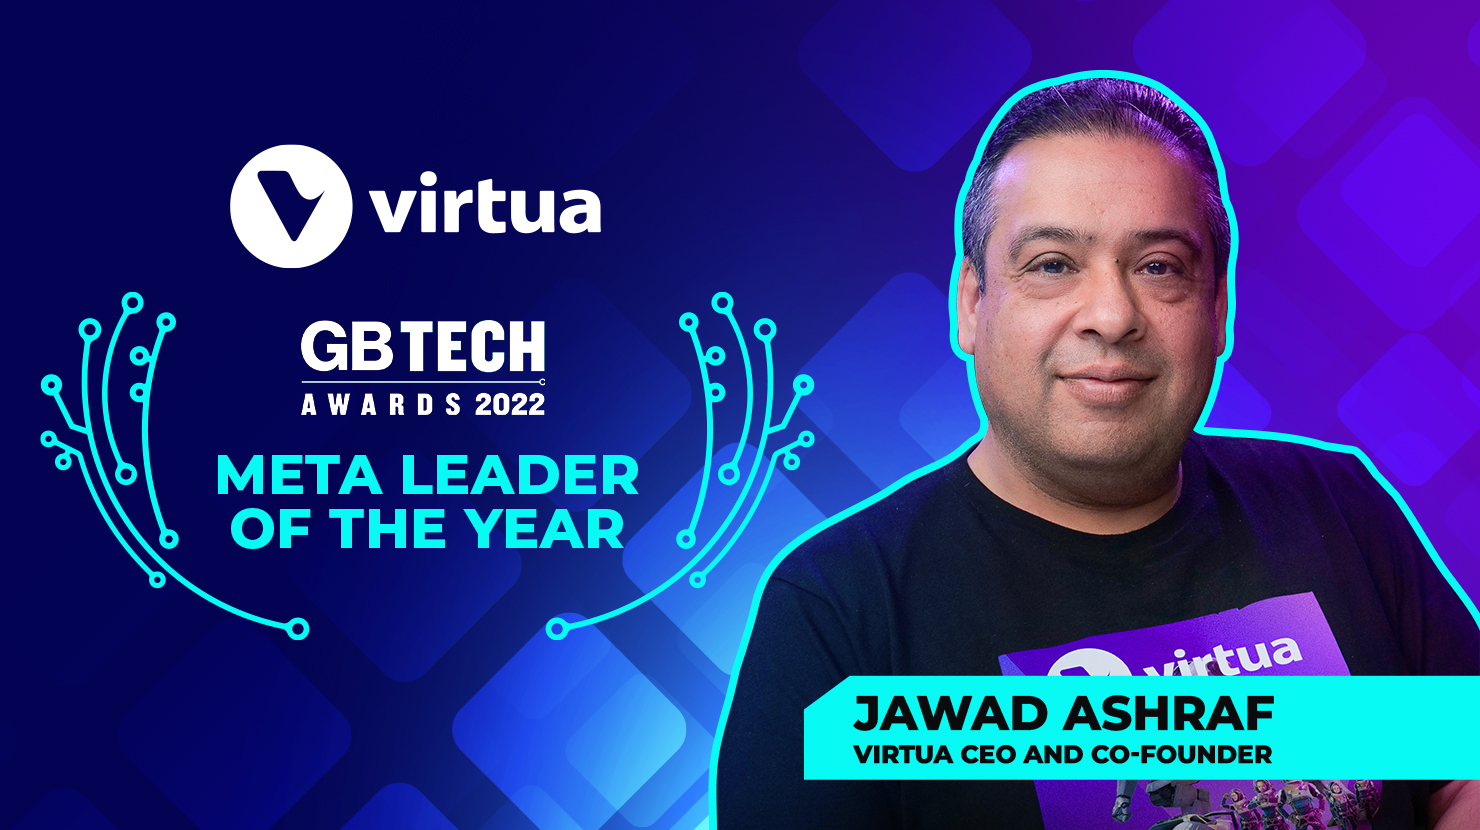 Jawad Ashraf Virtua GB Tech Meta Leader of the Year Award Winner Metaverse NFTs